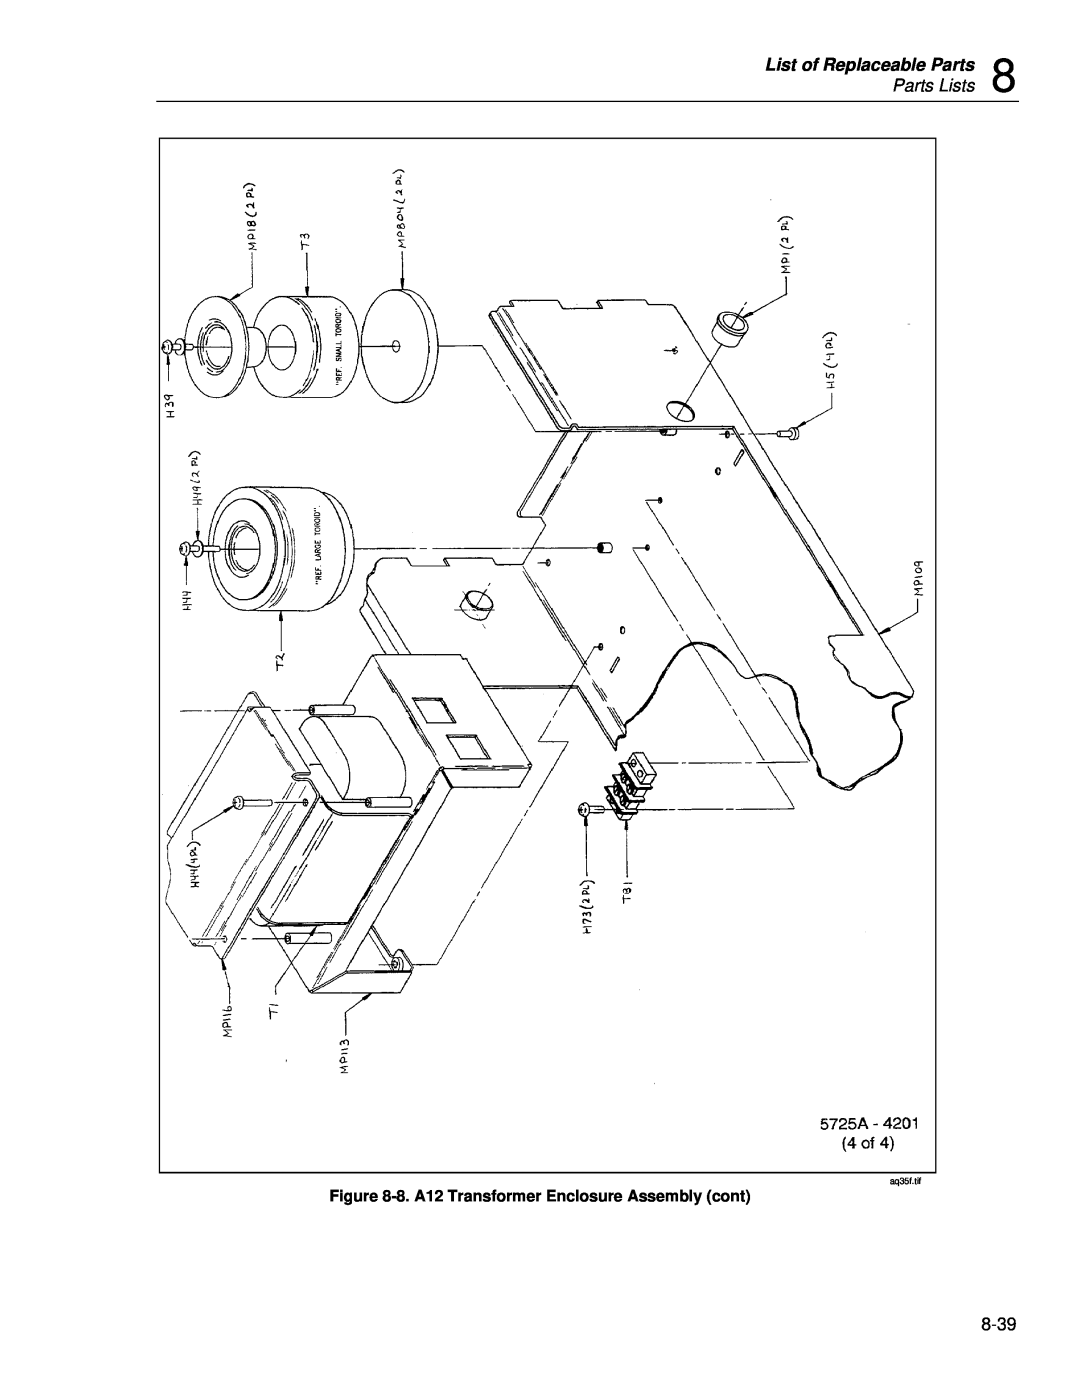 Fluke 5725A instruction manual List of Replaceable Parts, Parts Lists, aq35f.tif 